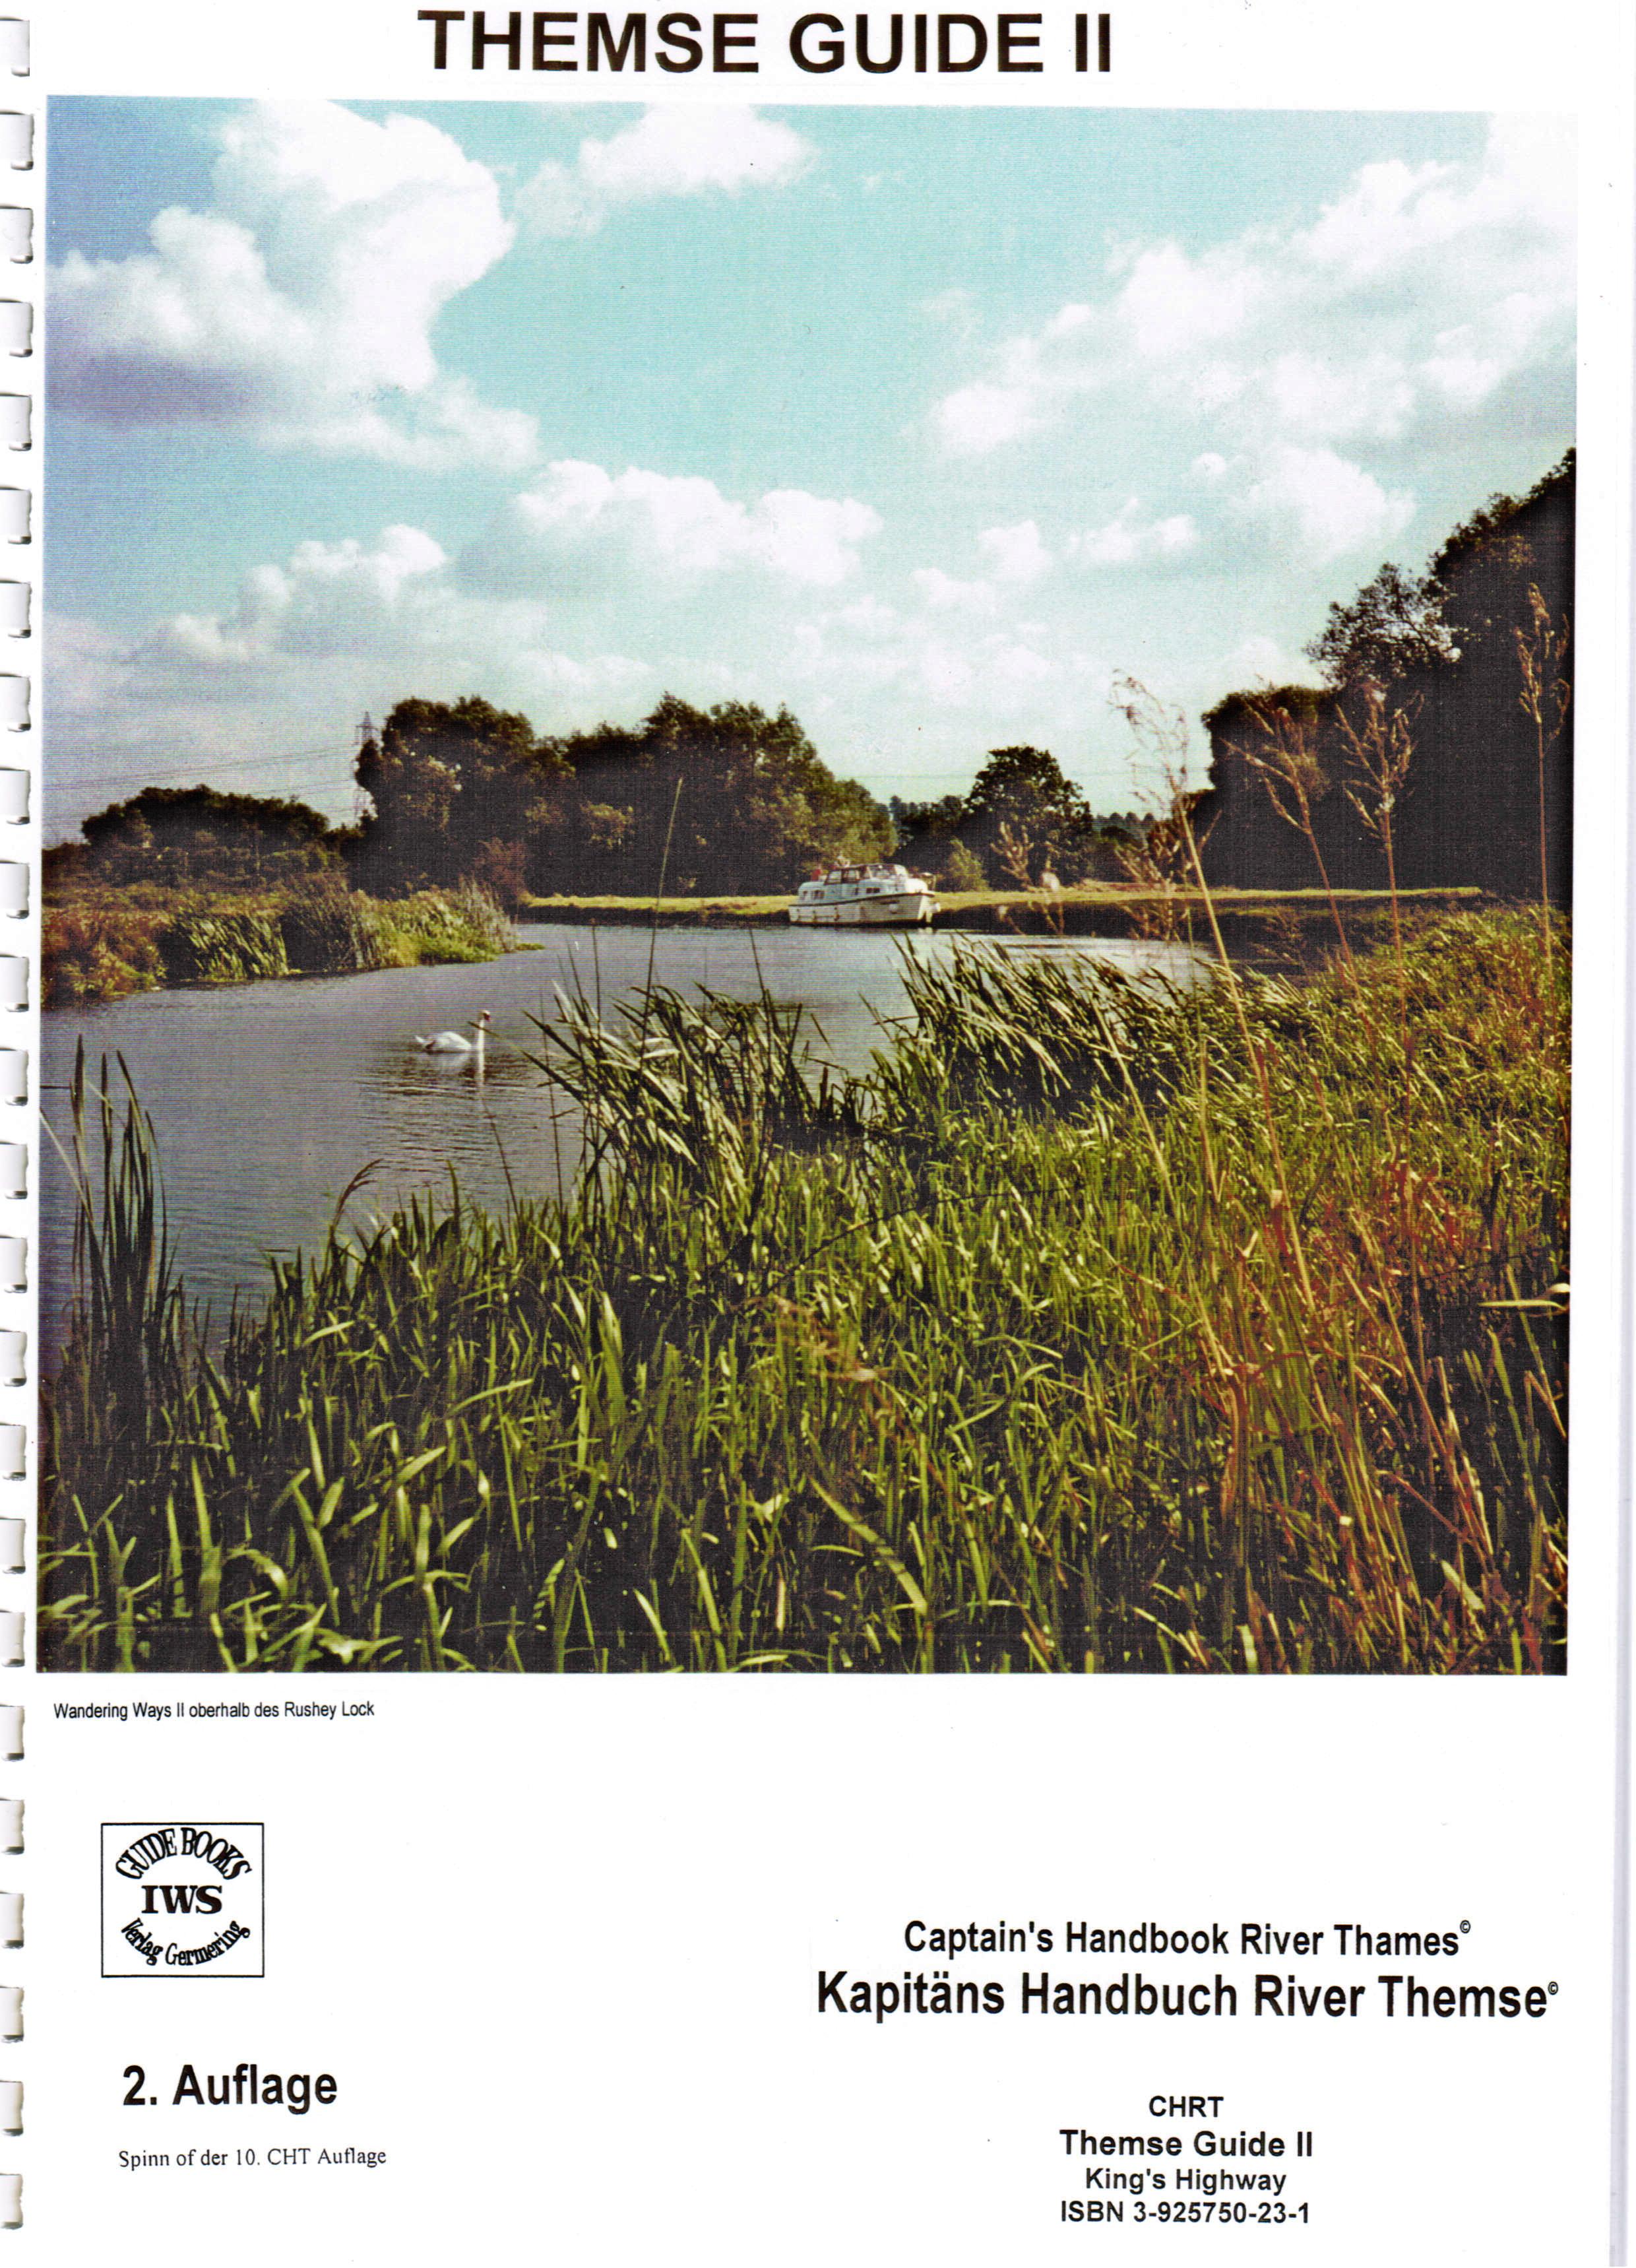 River Thames (Themse), above Rushey Lock, Lockkeeper: Graham Margesson (c) IWS Verlag/RJS